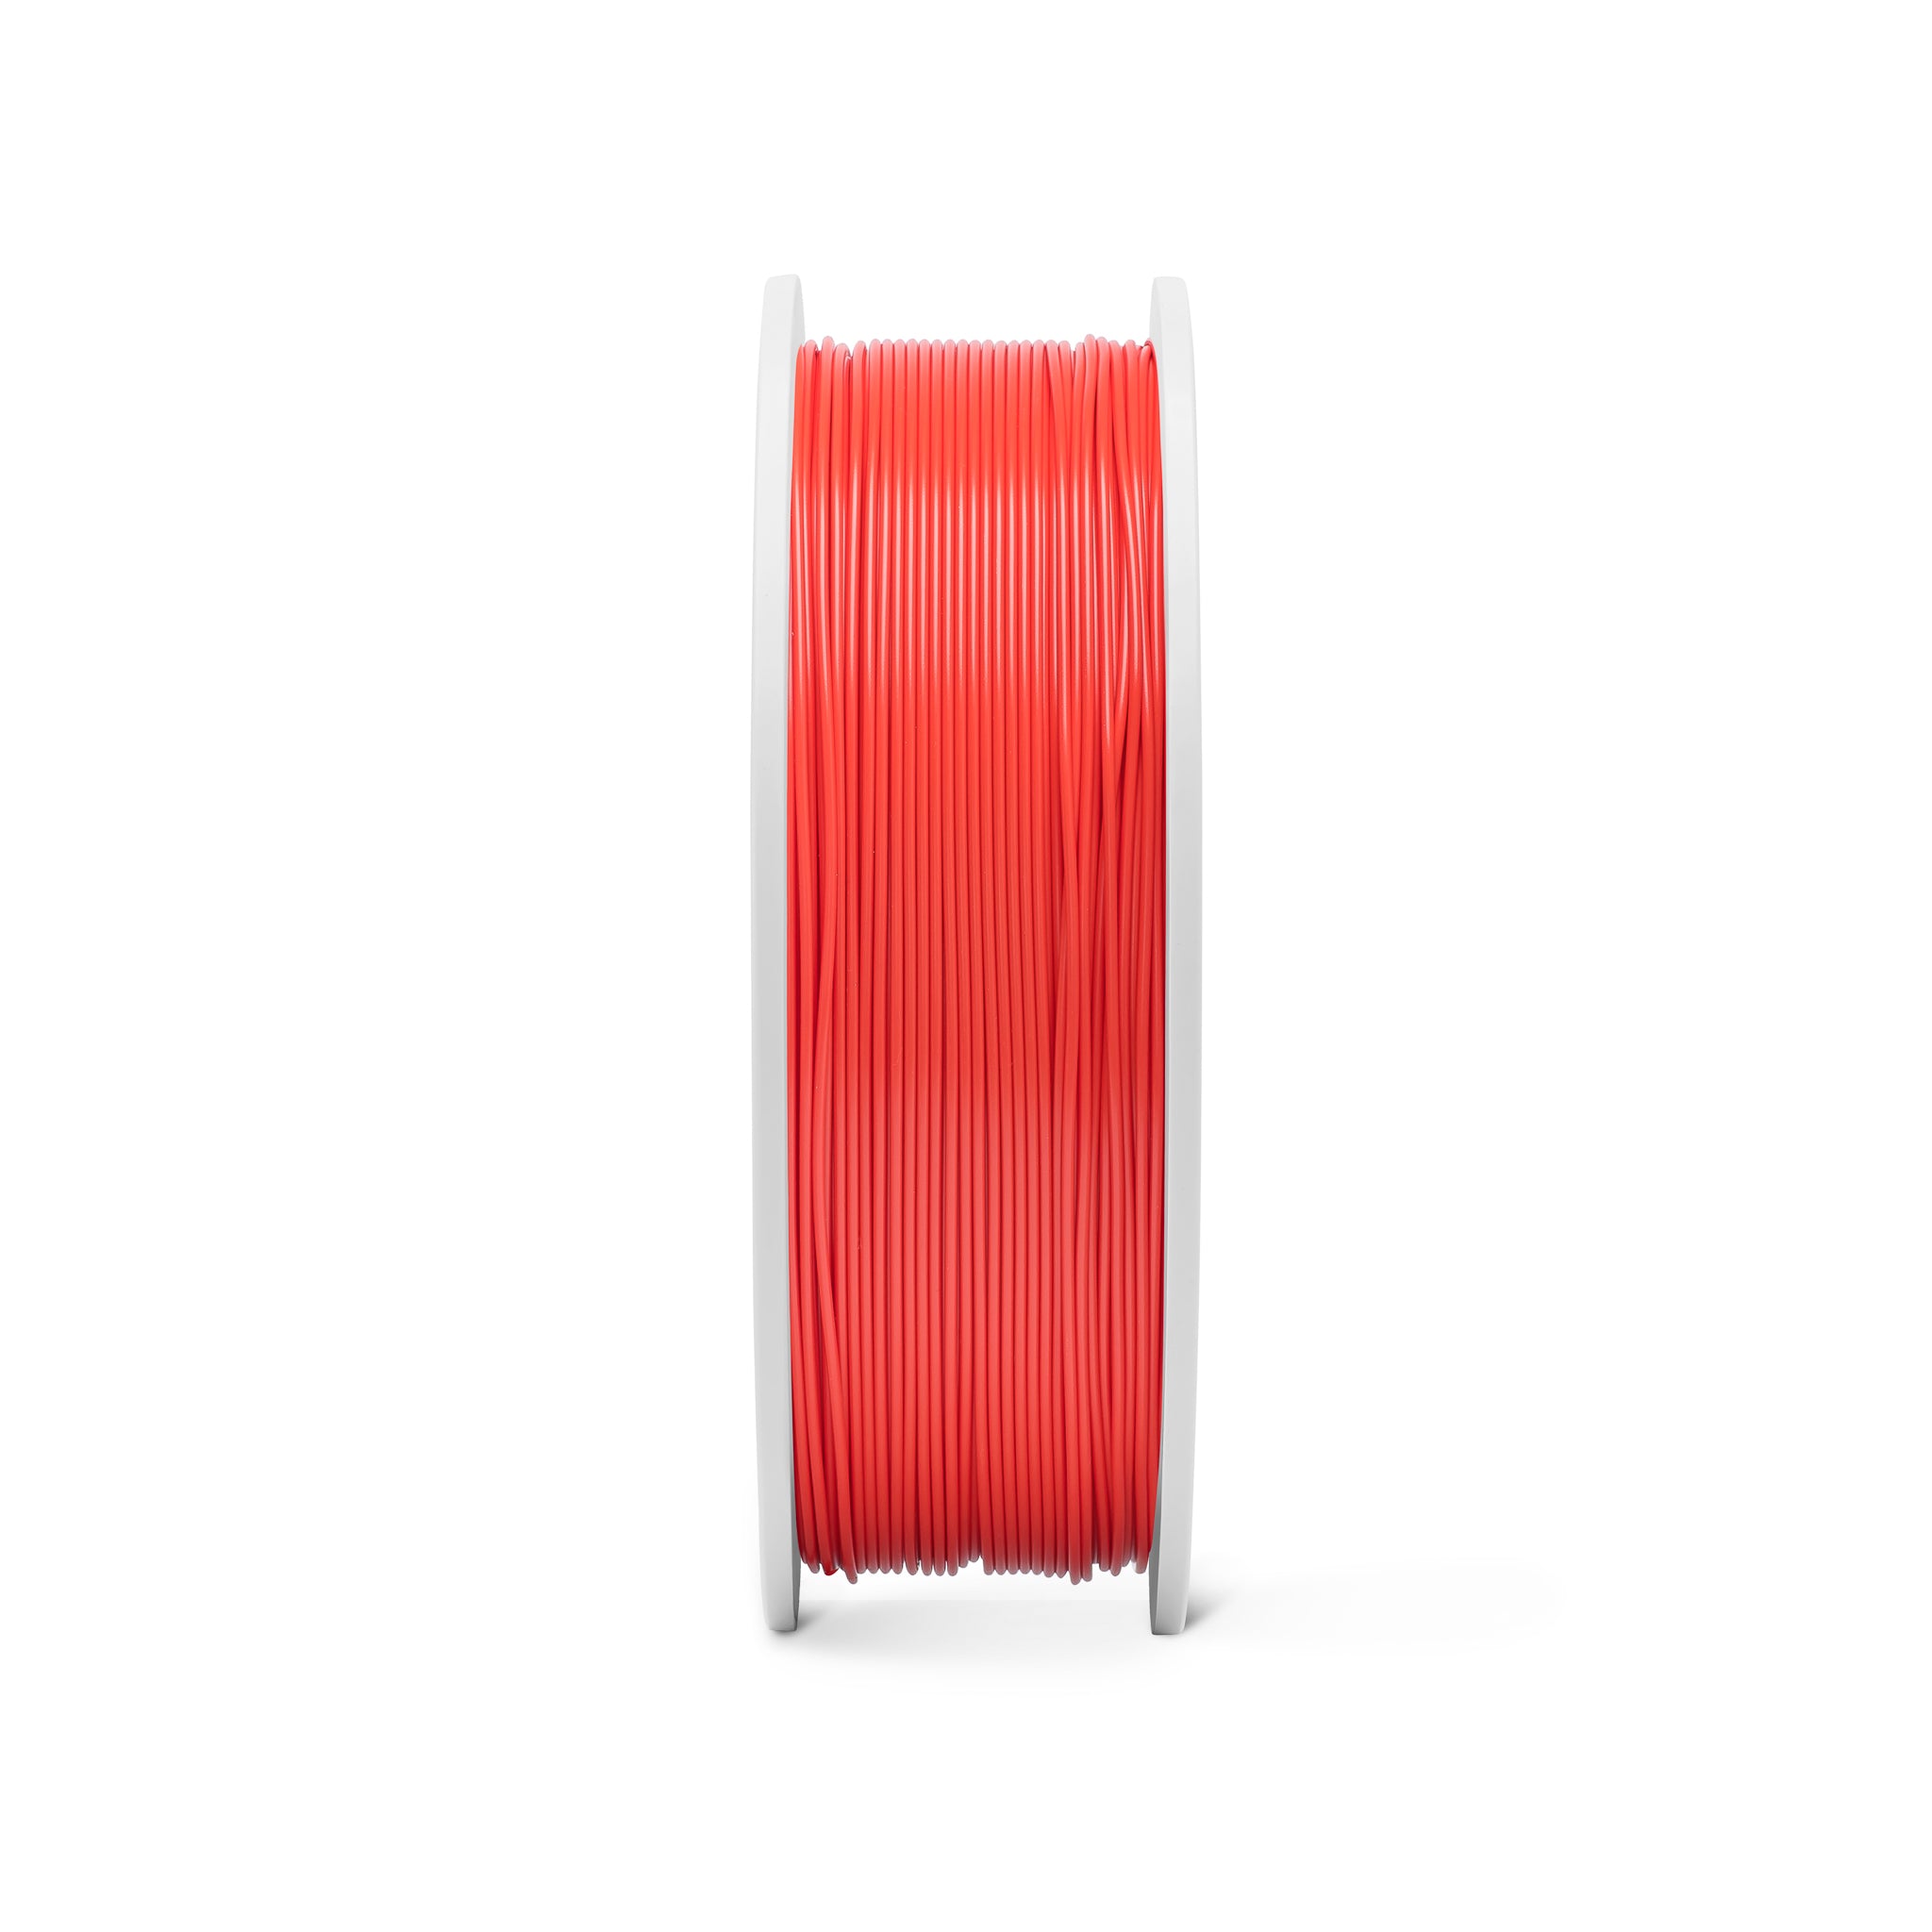 Fiberlogy Easy PLA 1.75mm. - Red Orange 850g